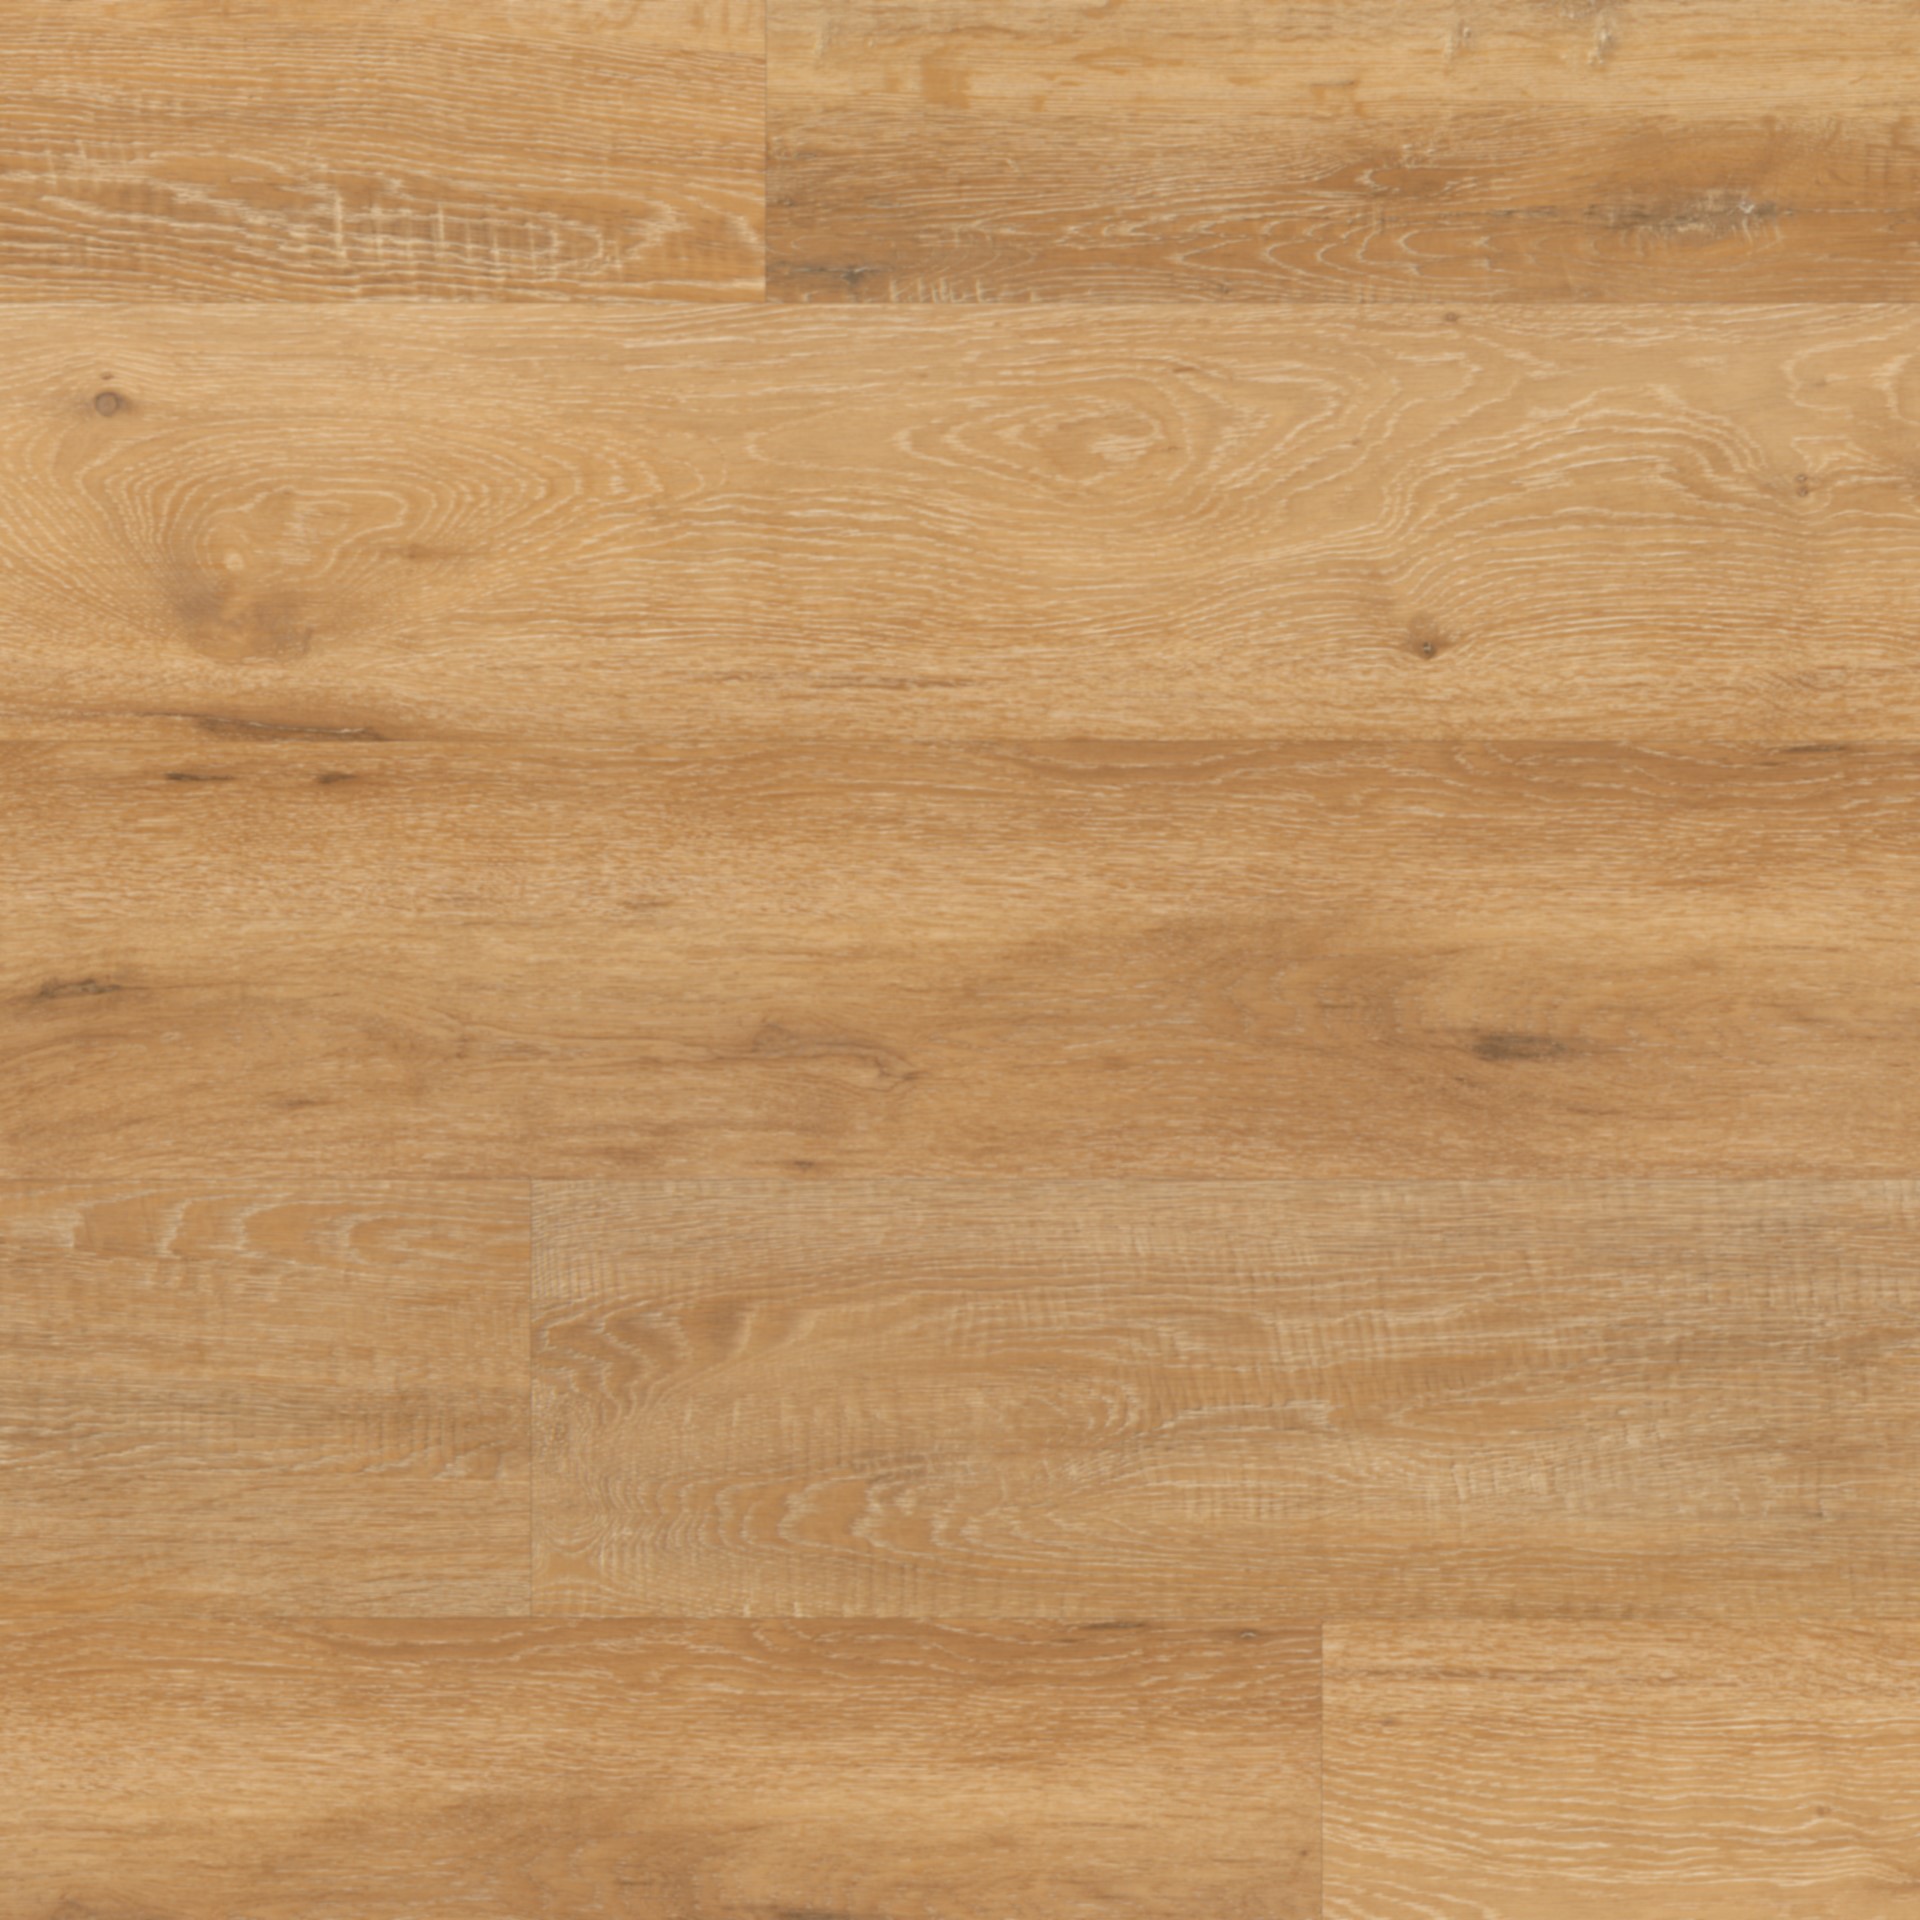 Karndean Korlok - Baltic Limed Oak RKP8111 Safety Flooring